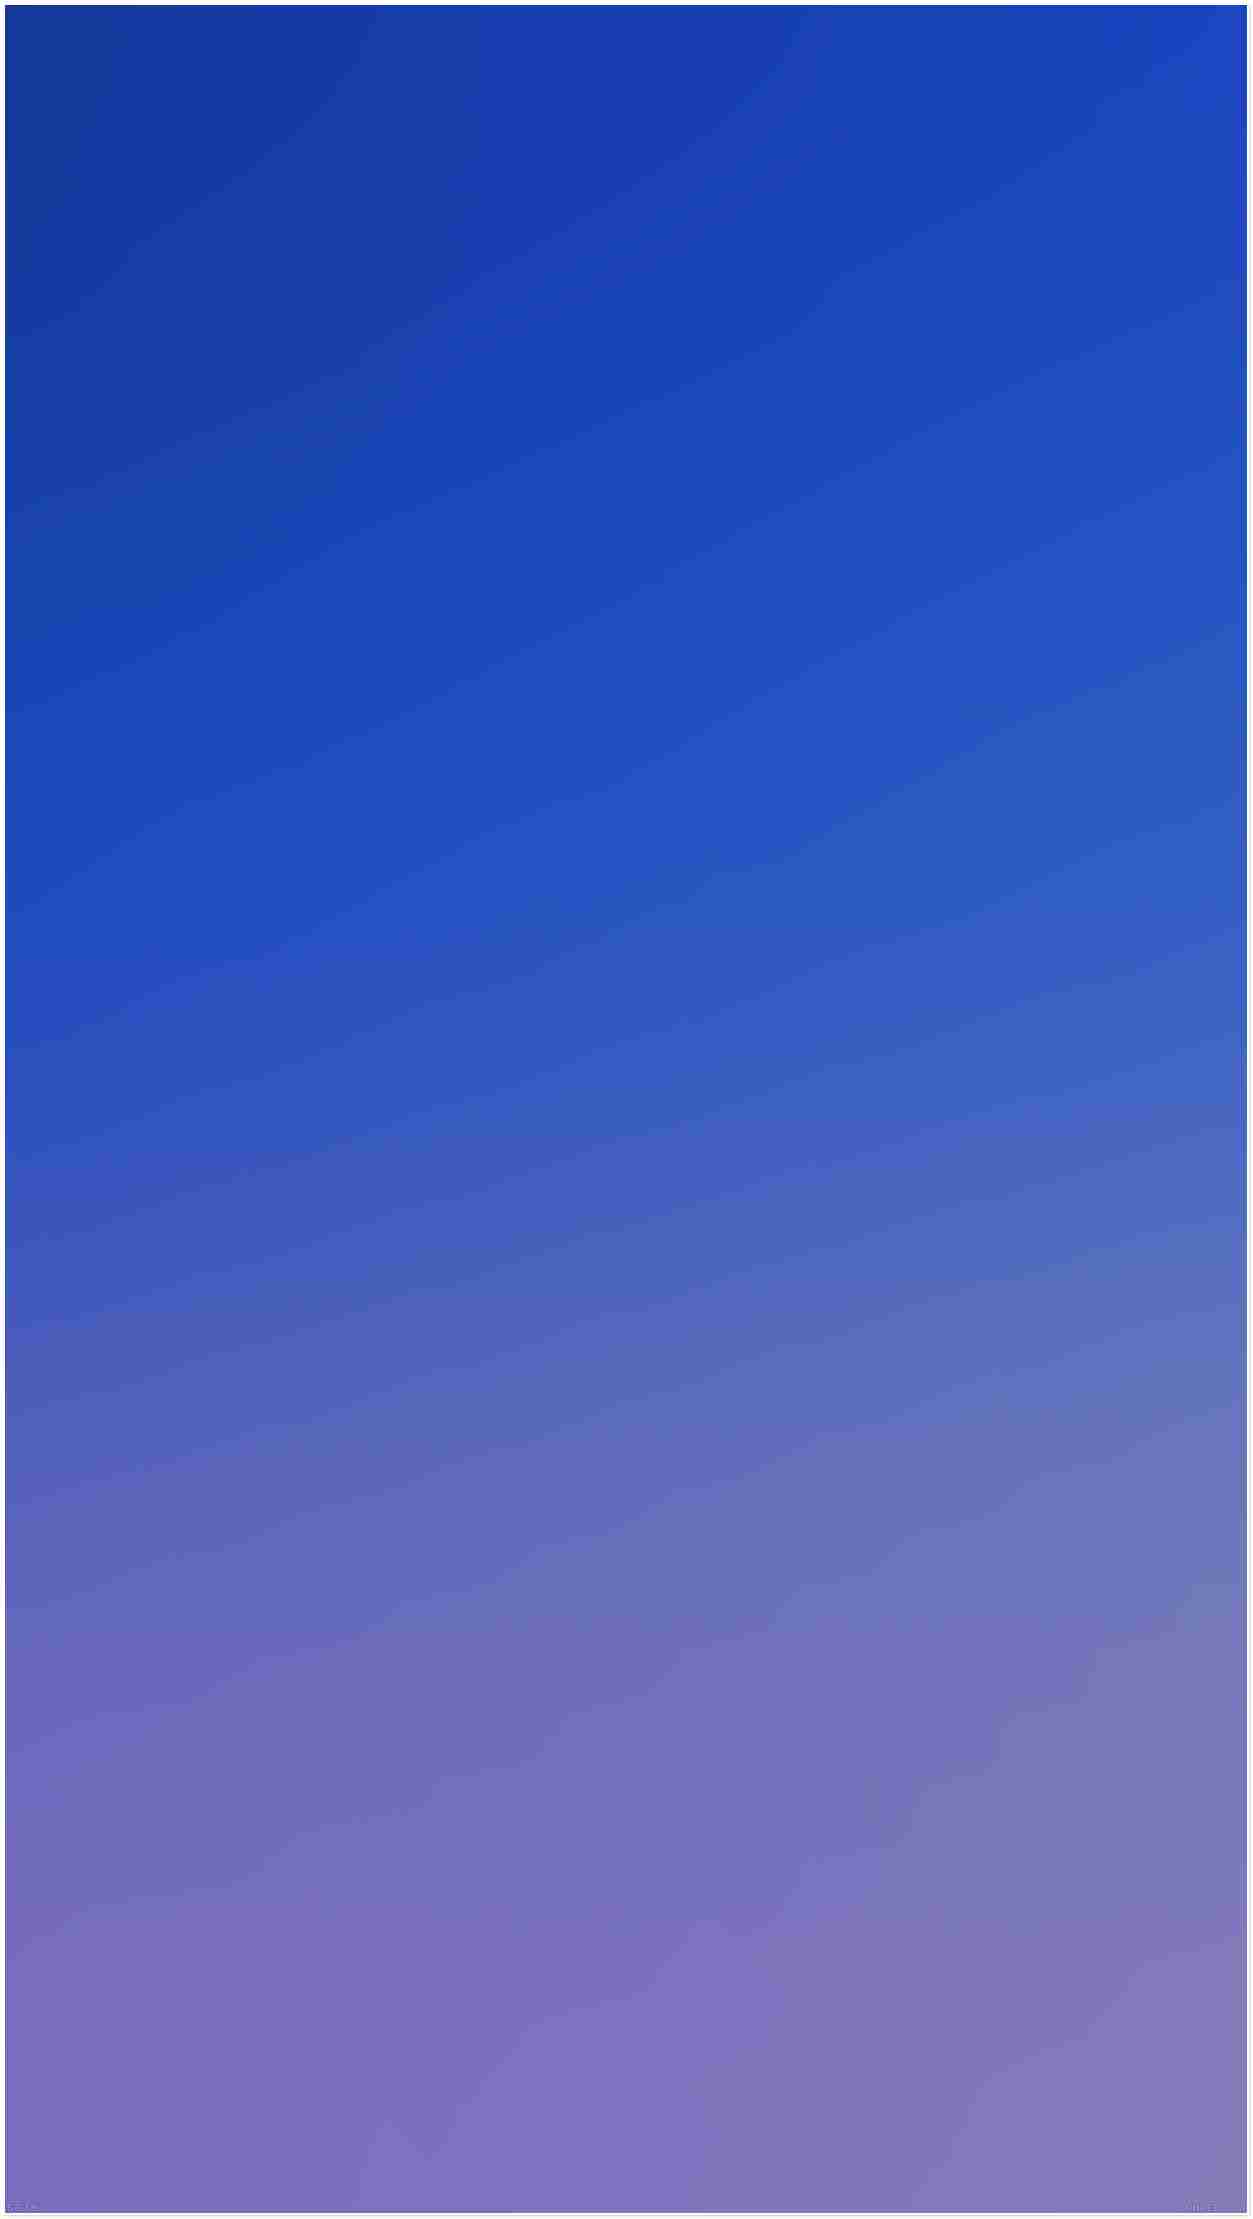 4k wallpaper telefon,blau,violett,lila,kobaltblau,himmel